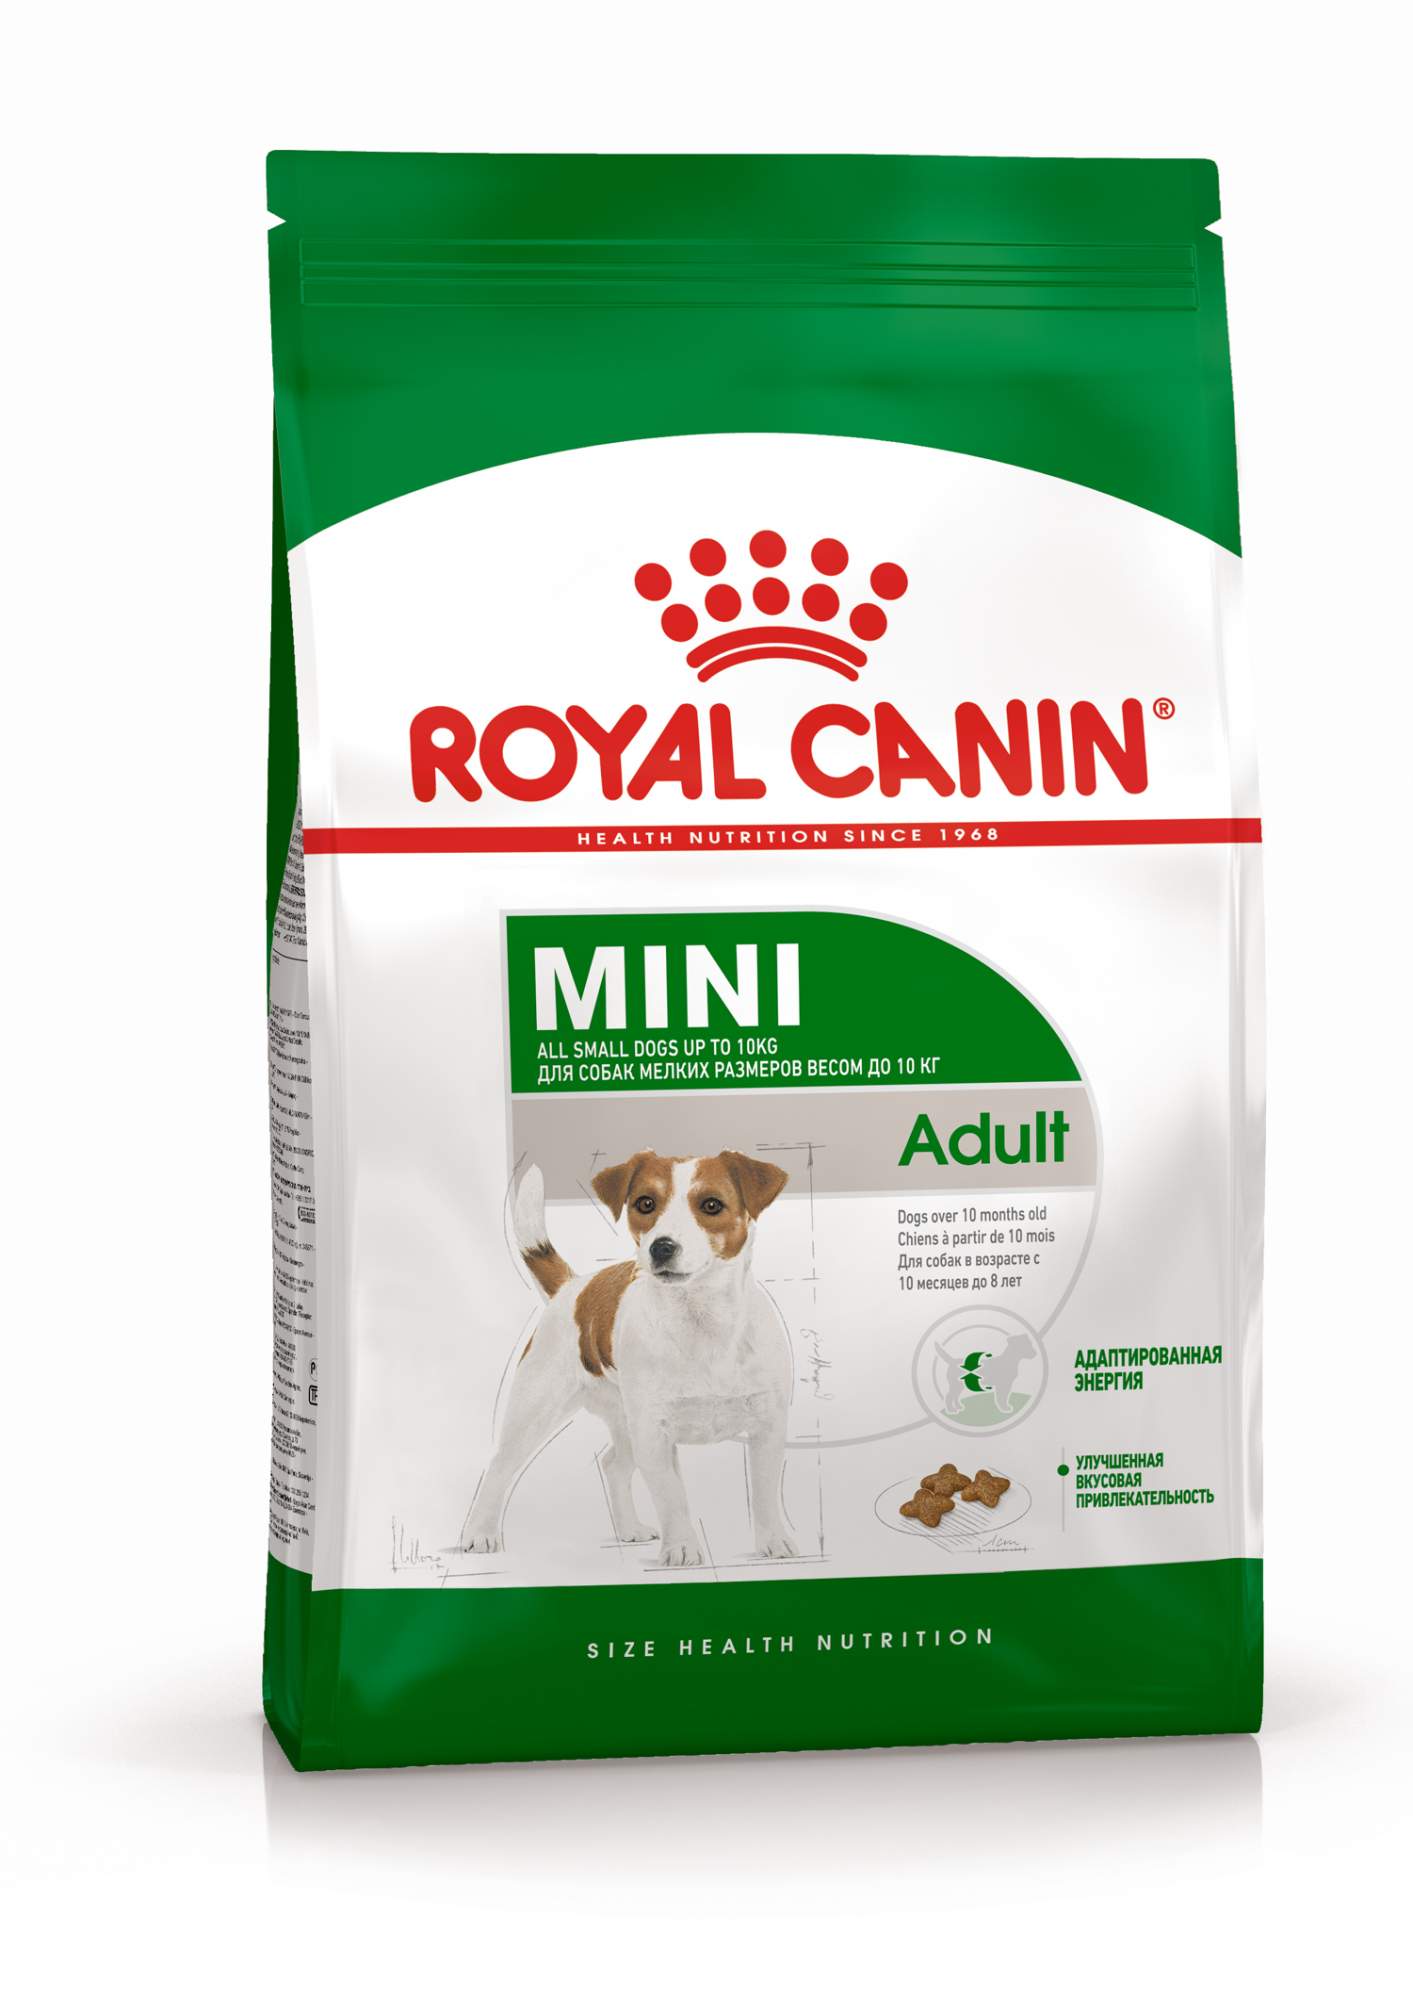 Сухой корм для собак Royal Canin Mini Adult, для малых пород 8 кг - купить в magizoo, цена на Мегамаркет